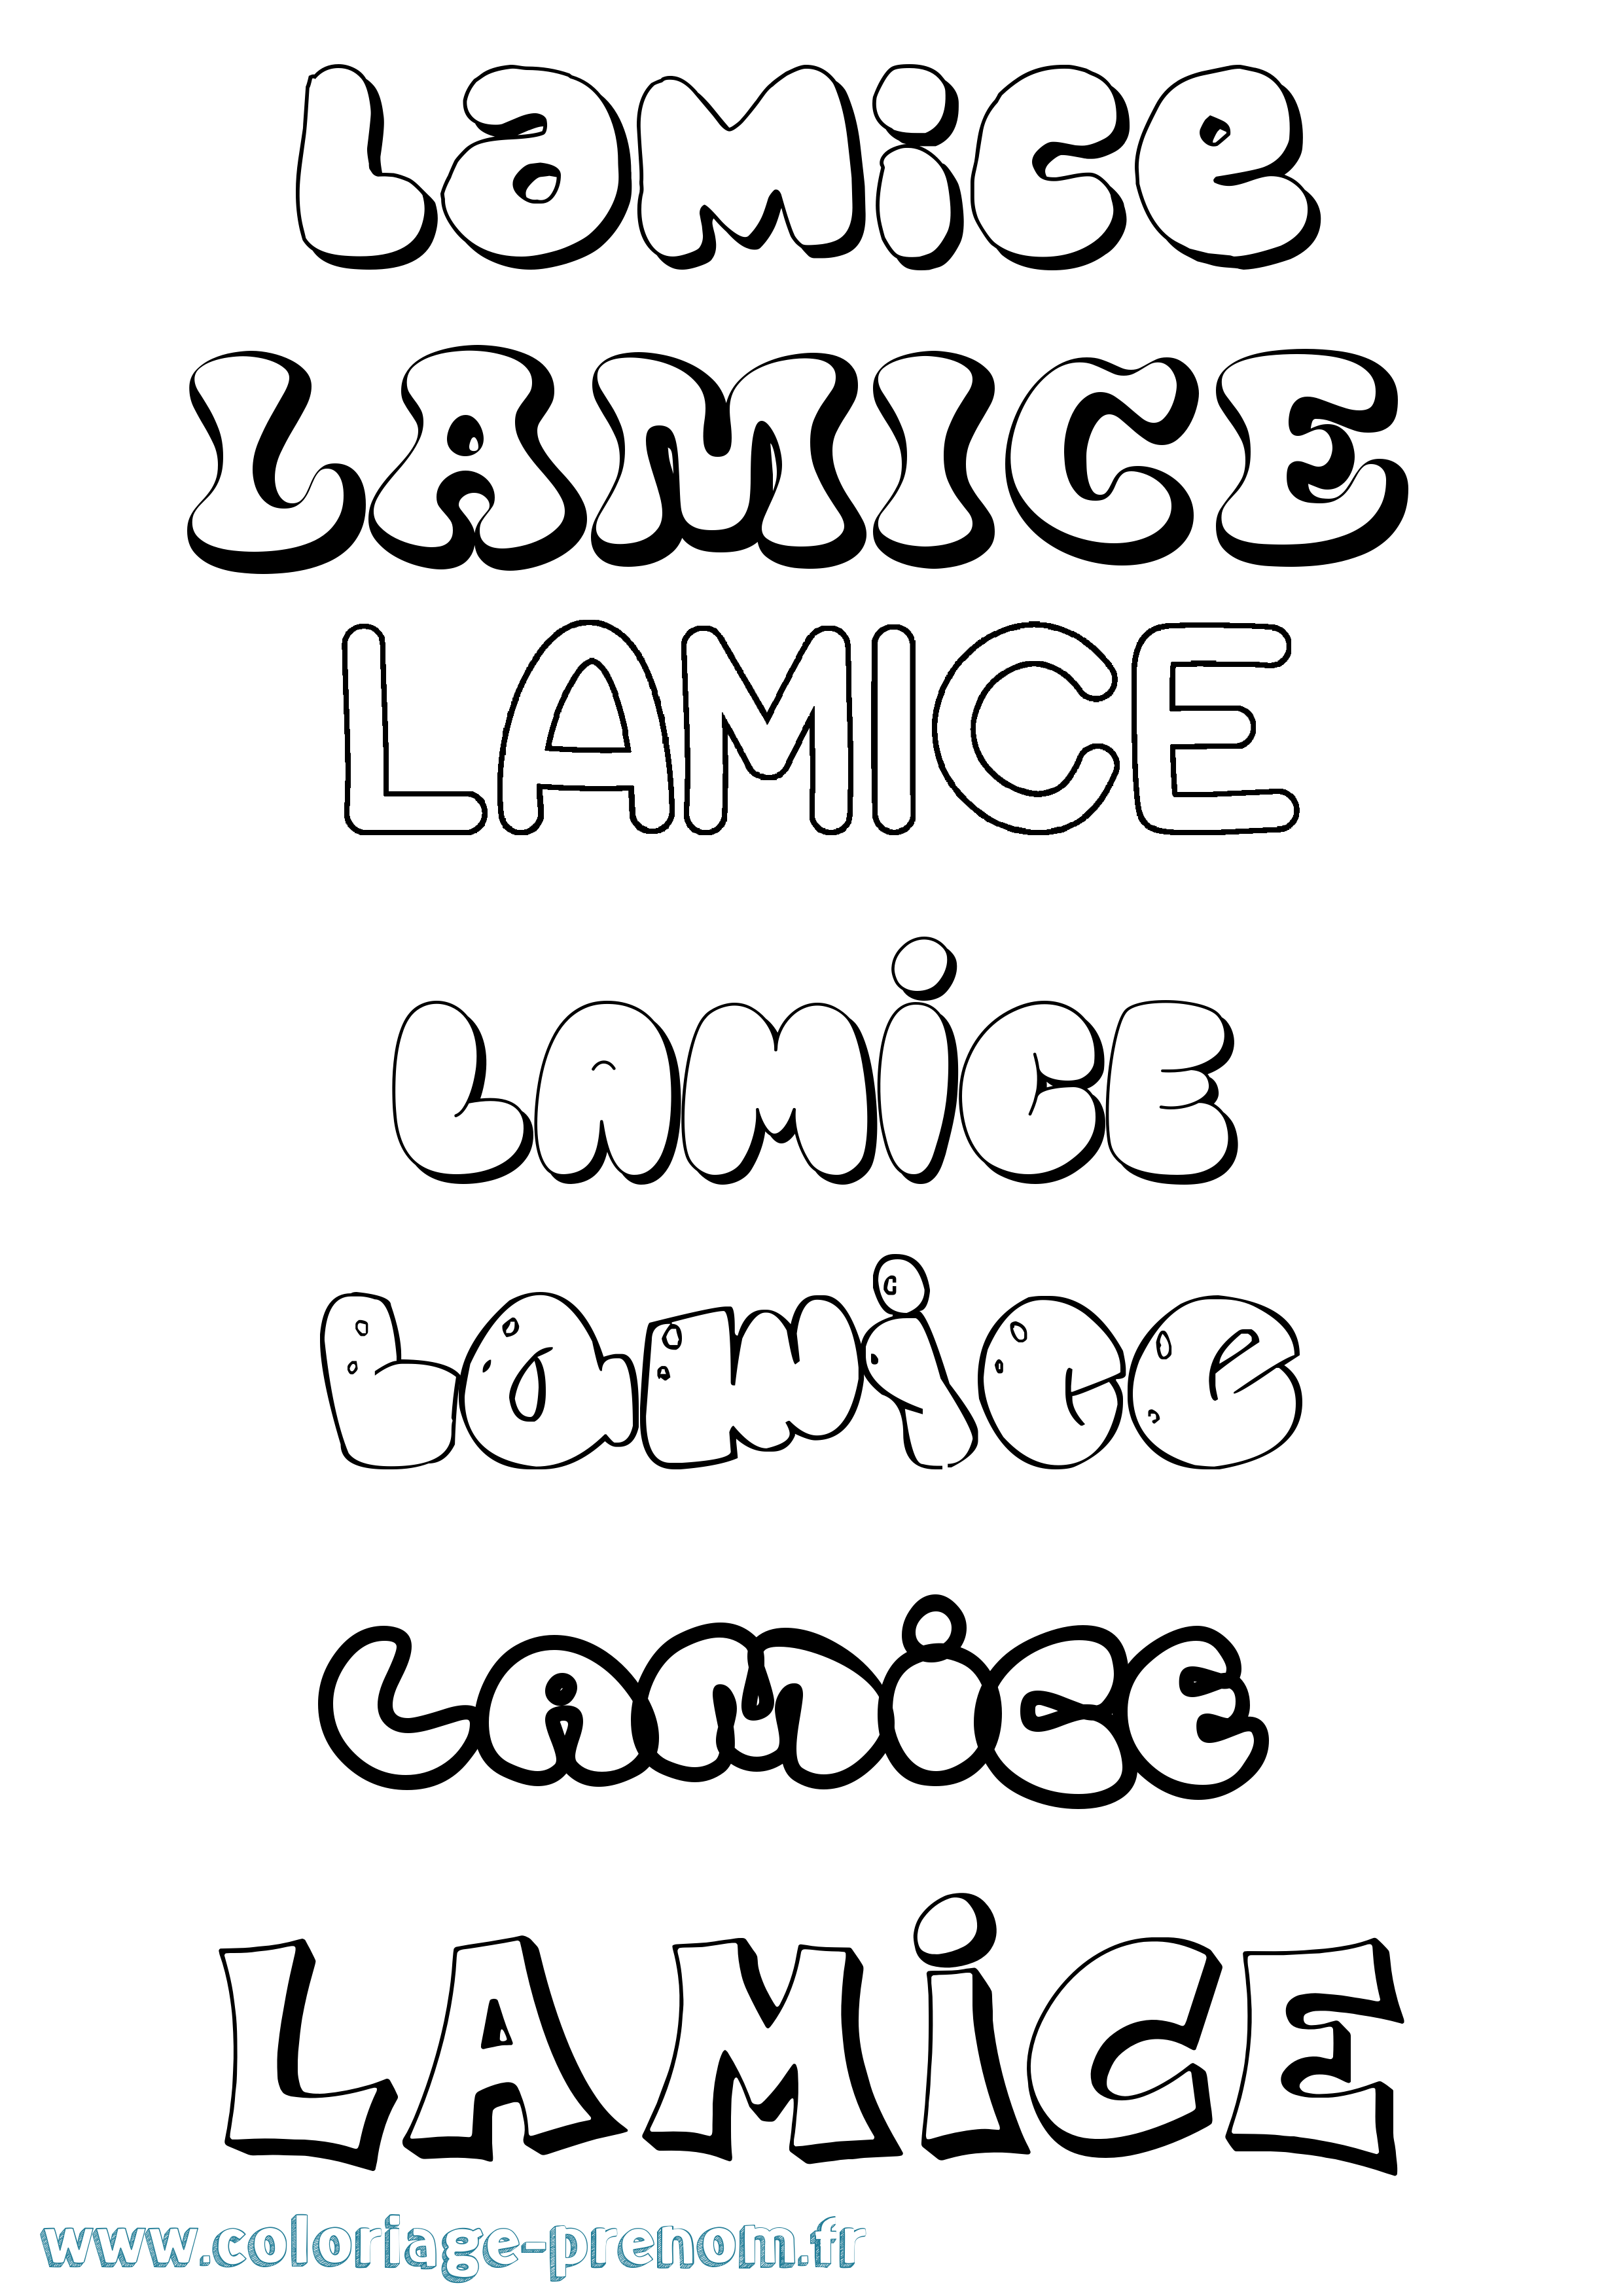 Coloriage prénom Lamice Bubble